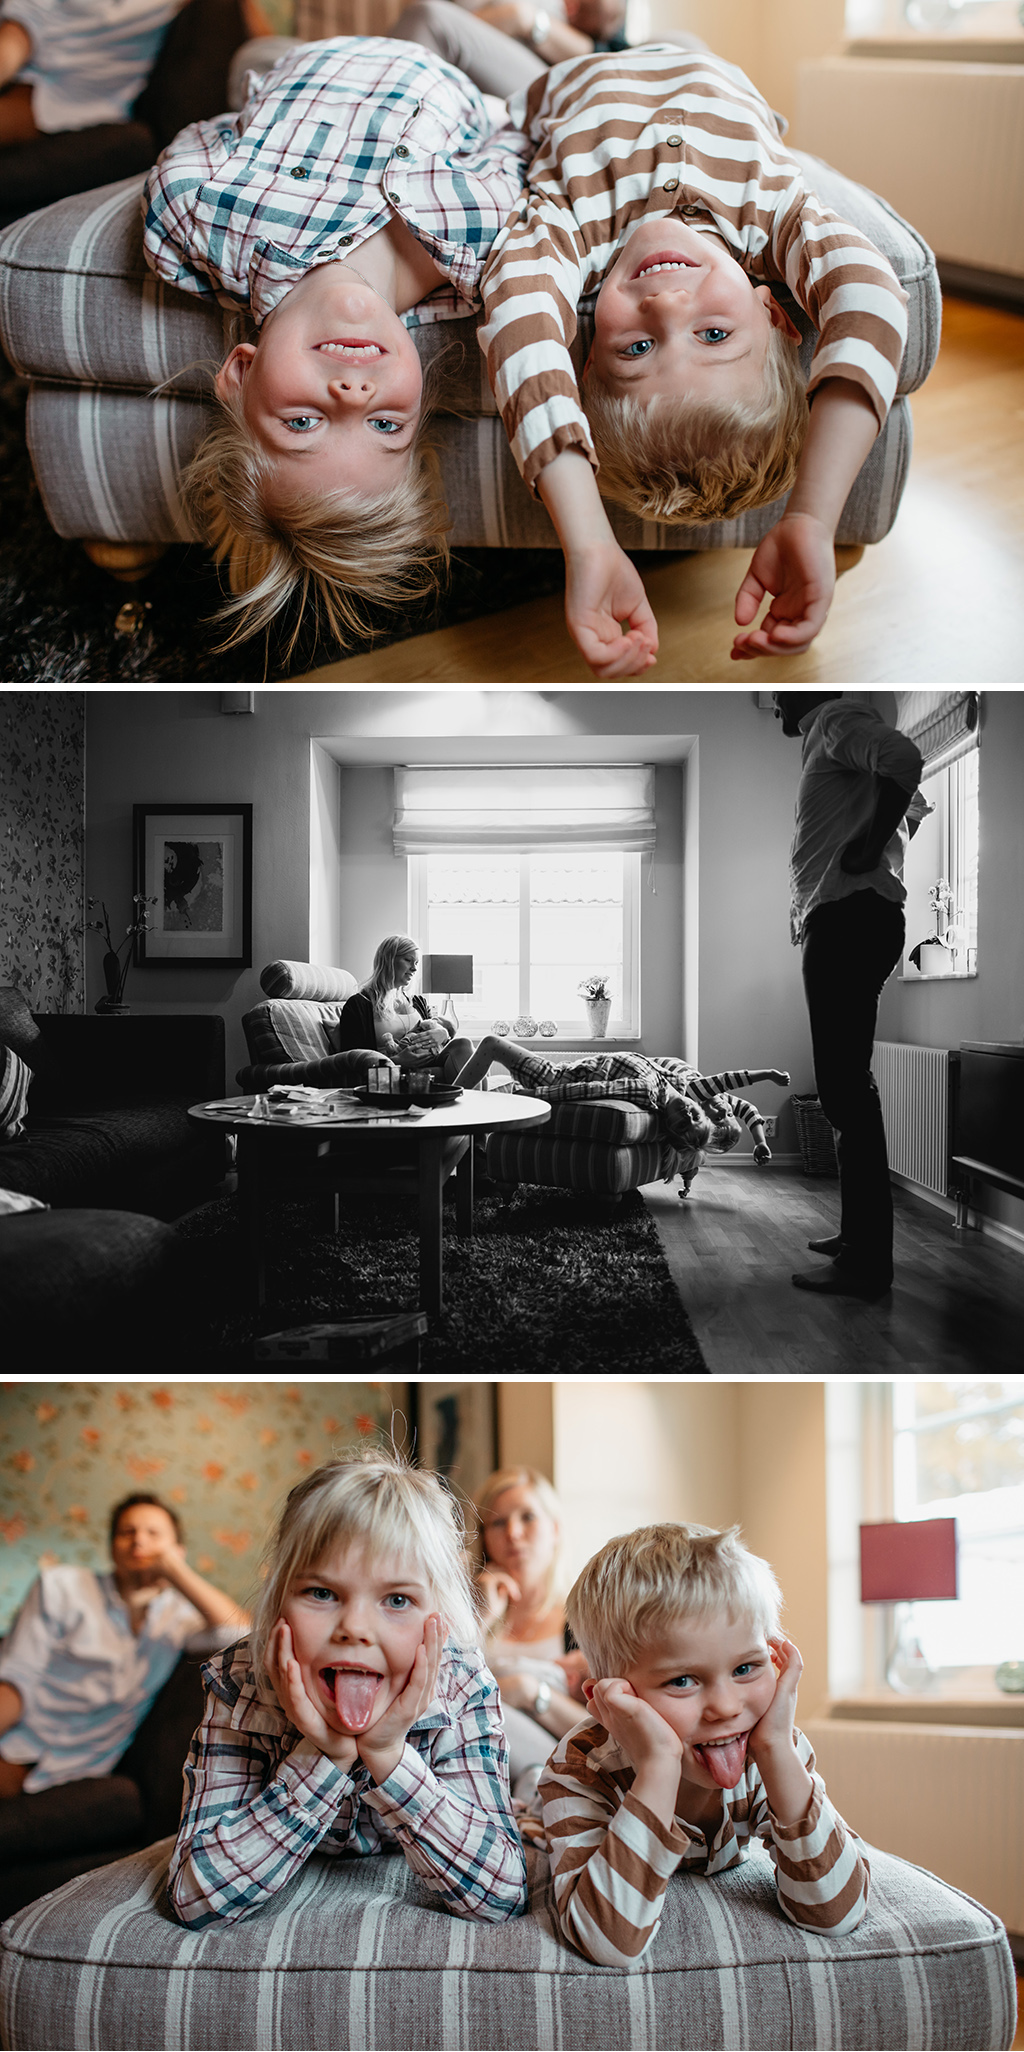 Nyfoddfotografering-lifestyle-familjefotografering-Stockholm-3.jpg